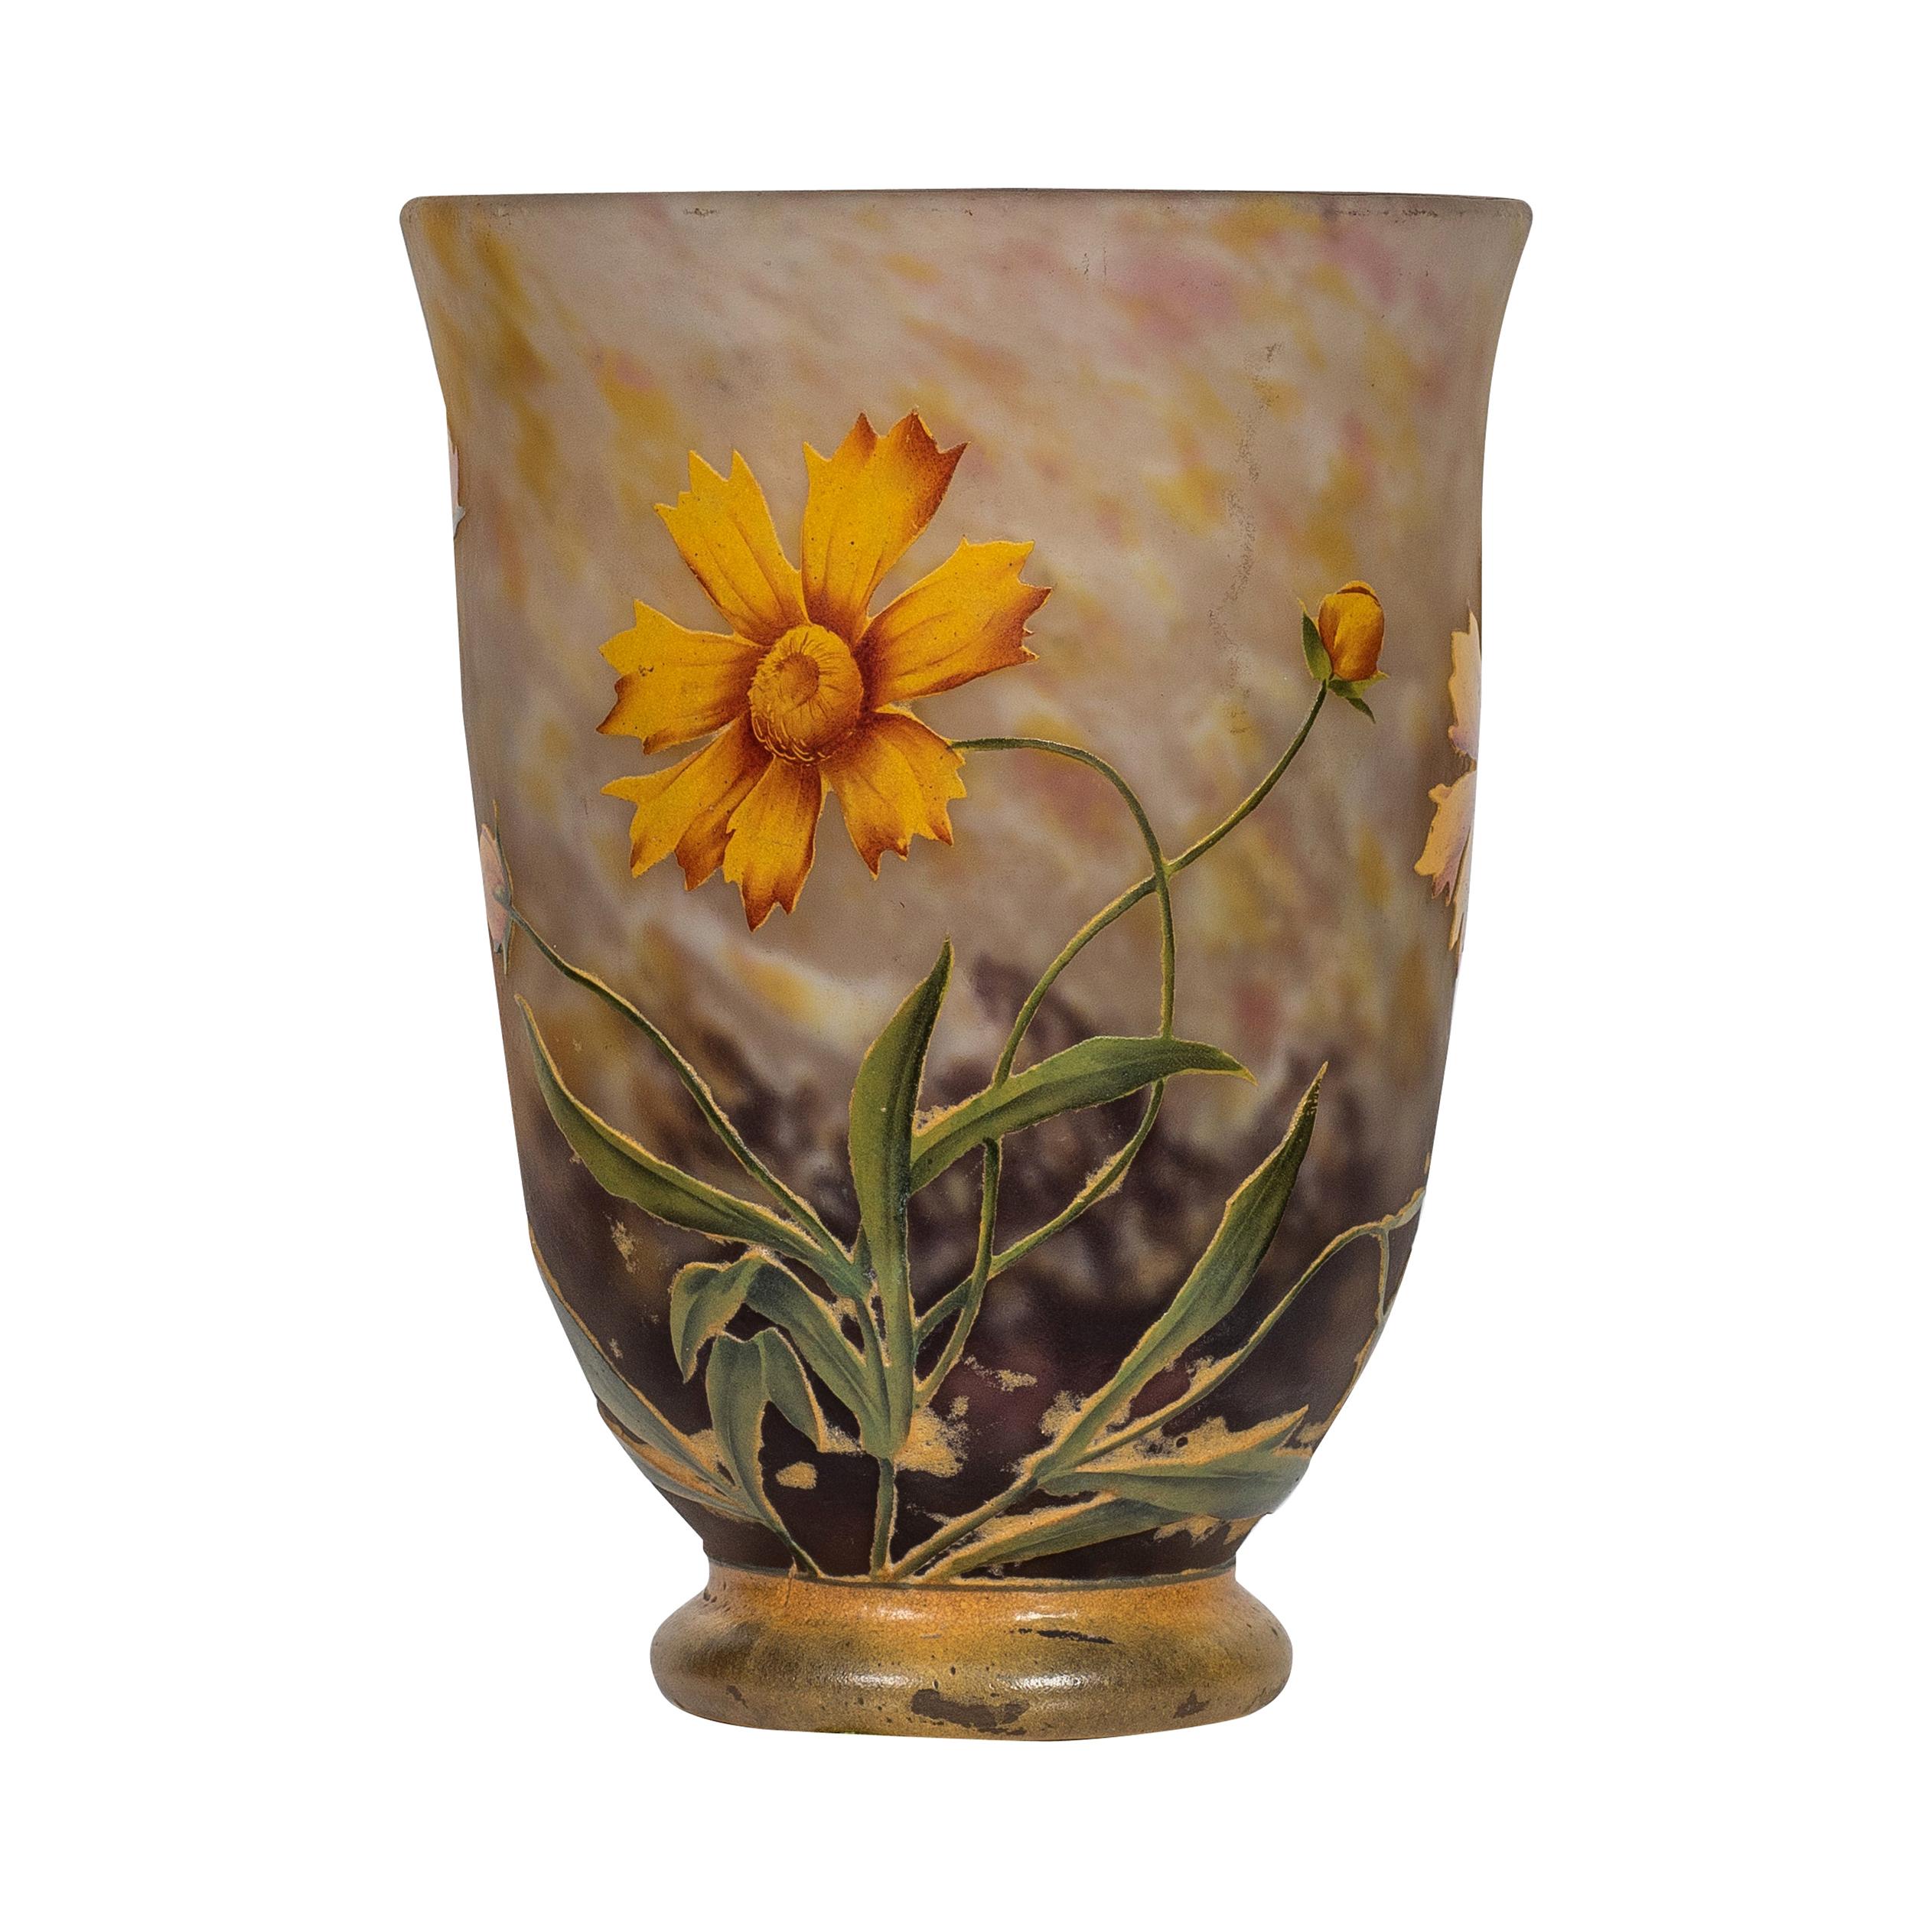 Daum Nancy Enamelled and Internally Decorated Glass Vase, France circa 1900-1910